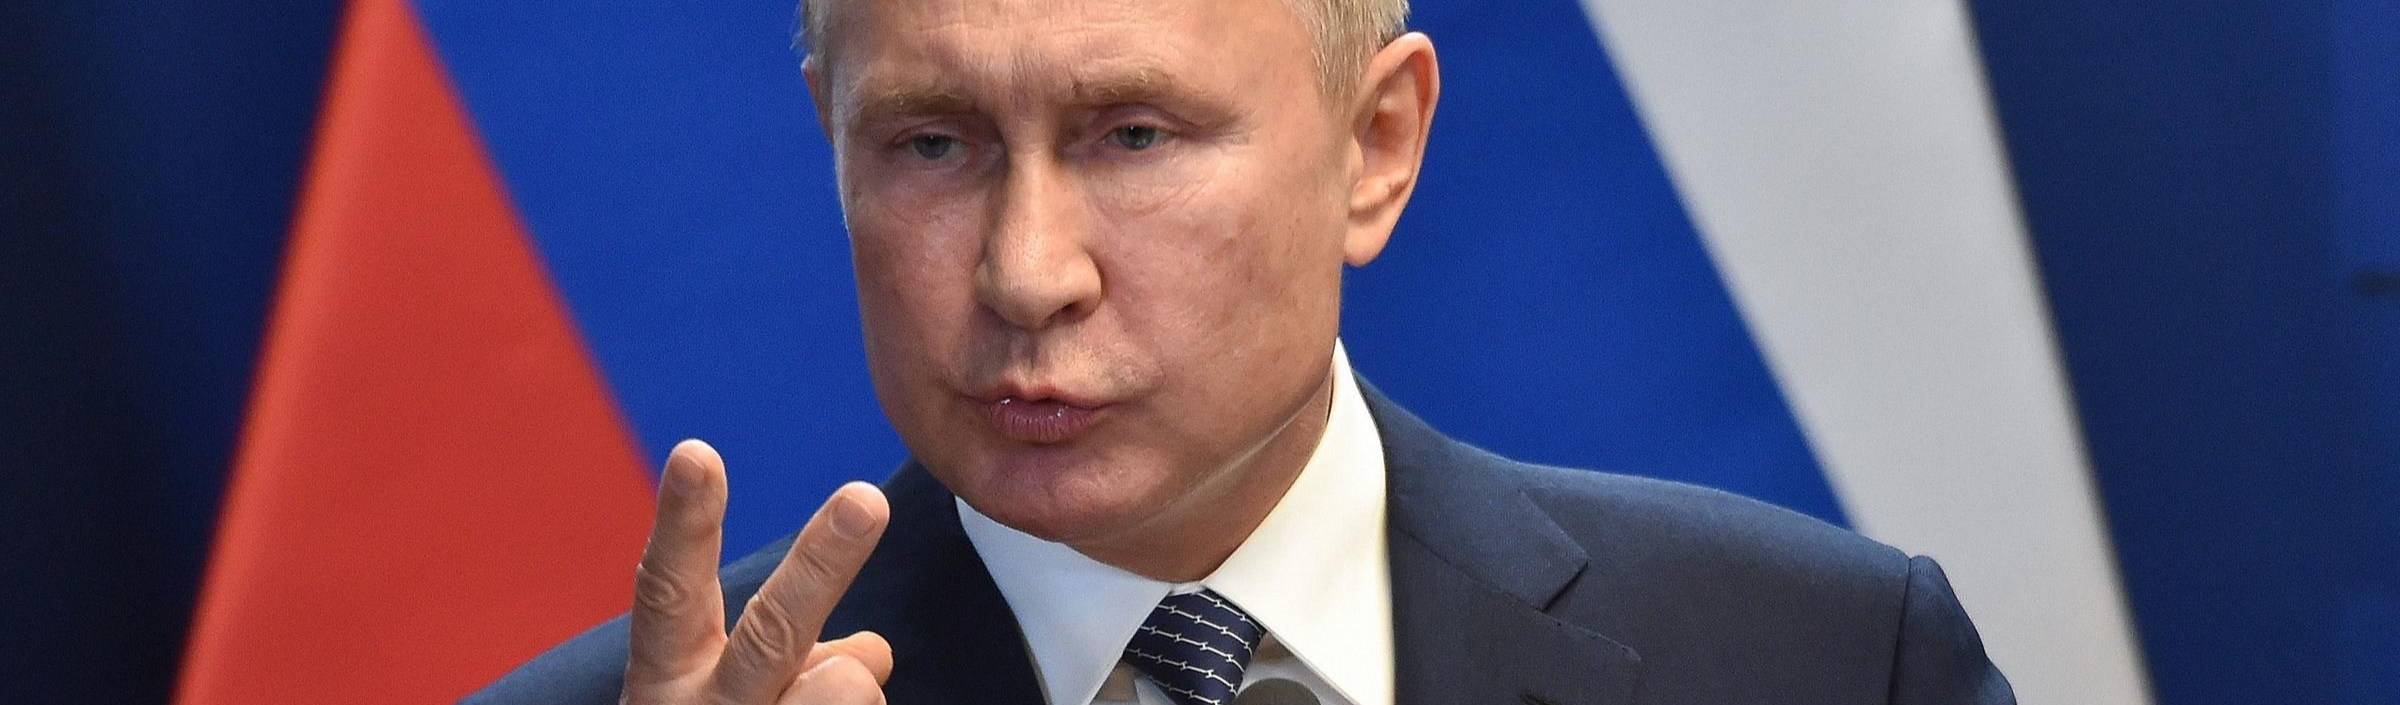 Vladimir Putin admite reforma constitucional para permitir disputa de novo mandato